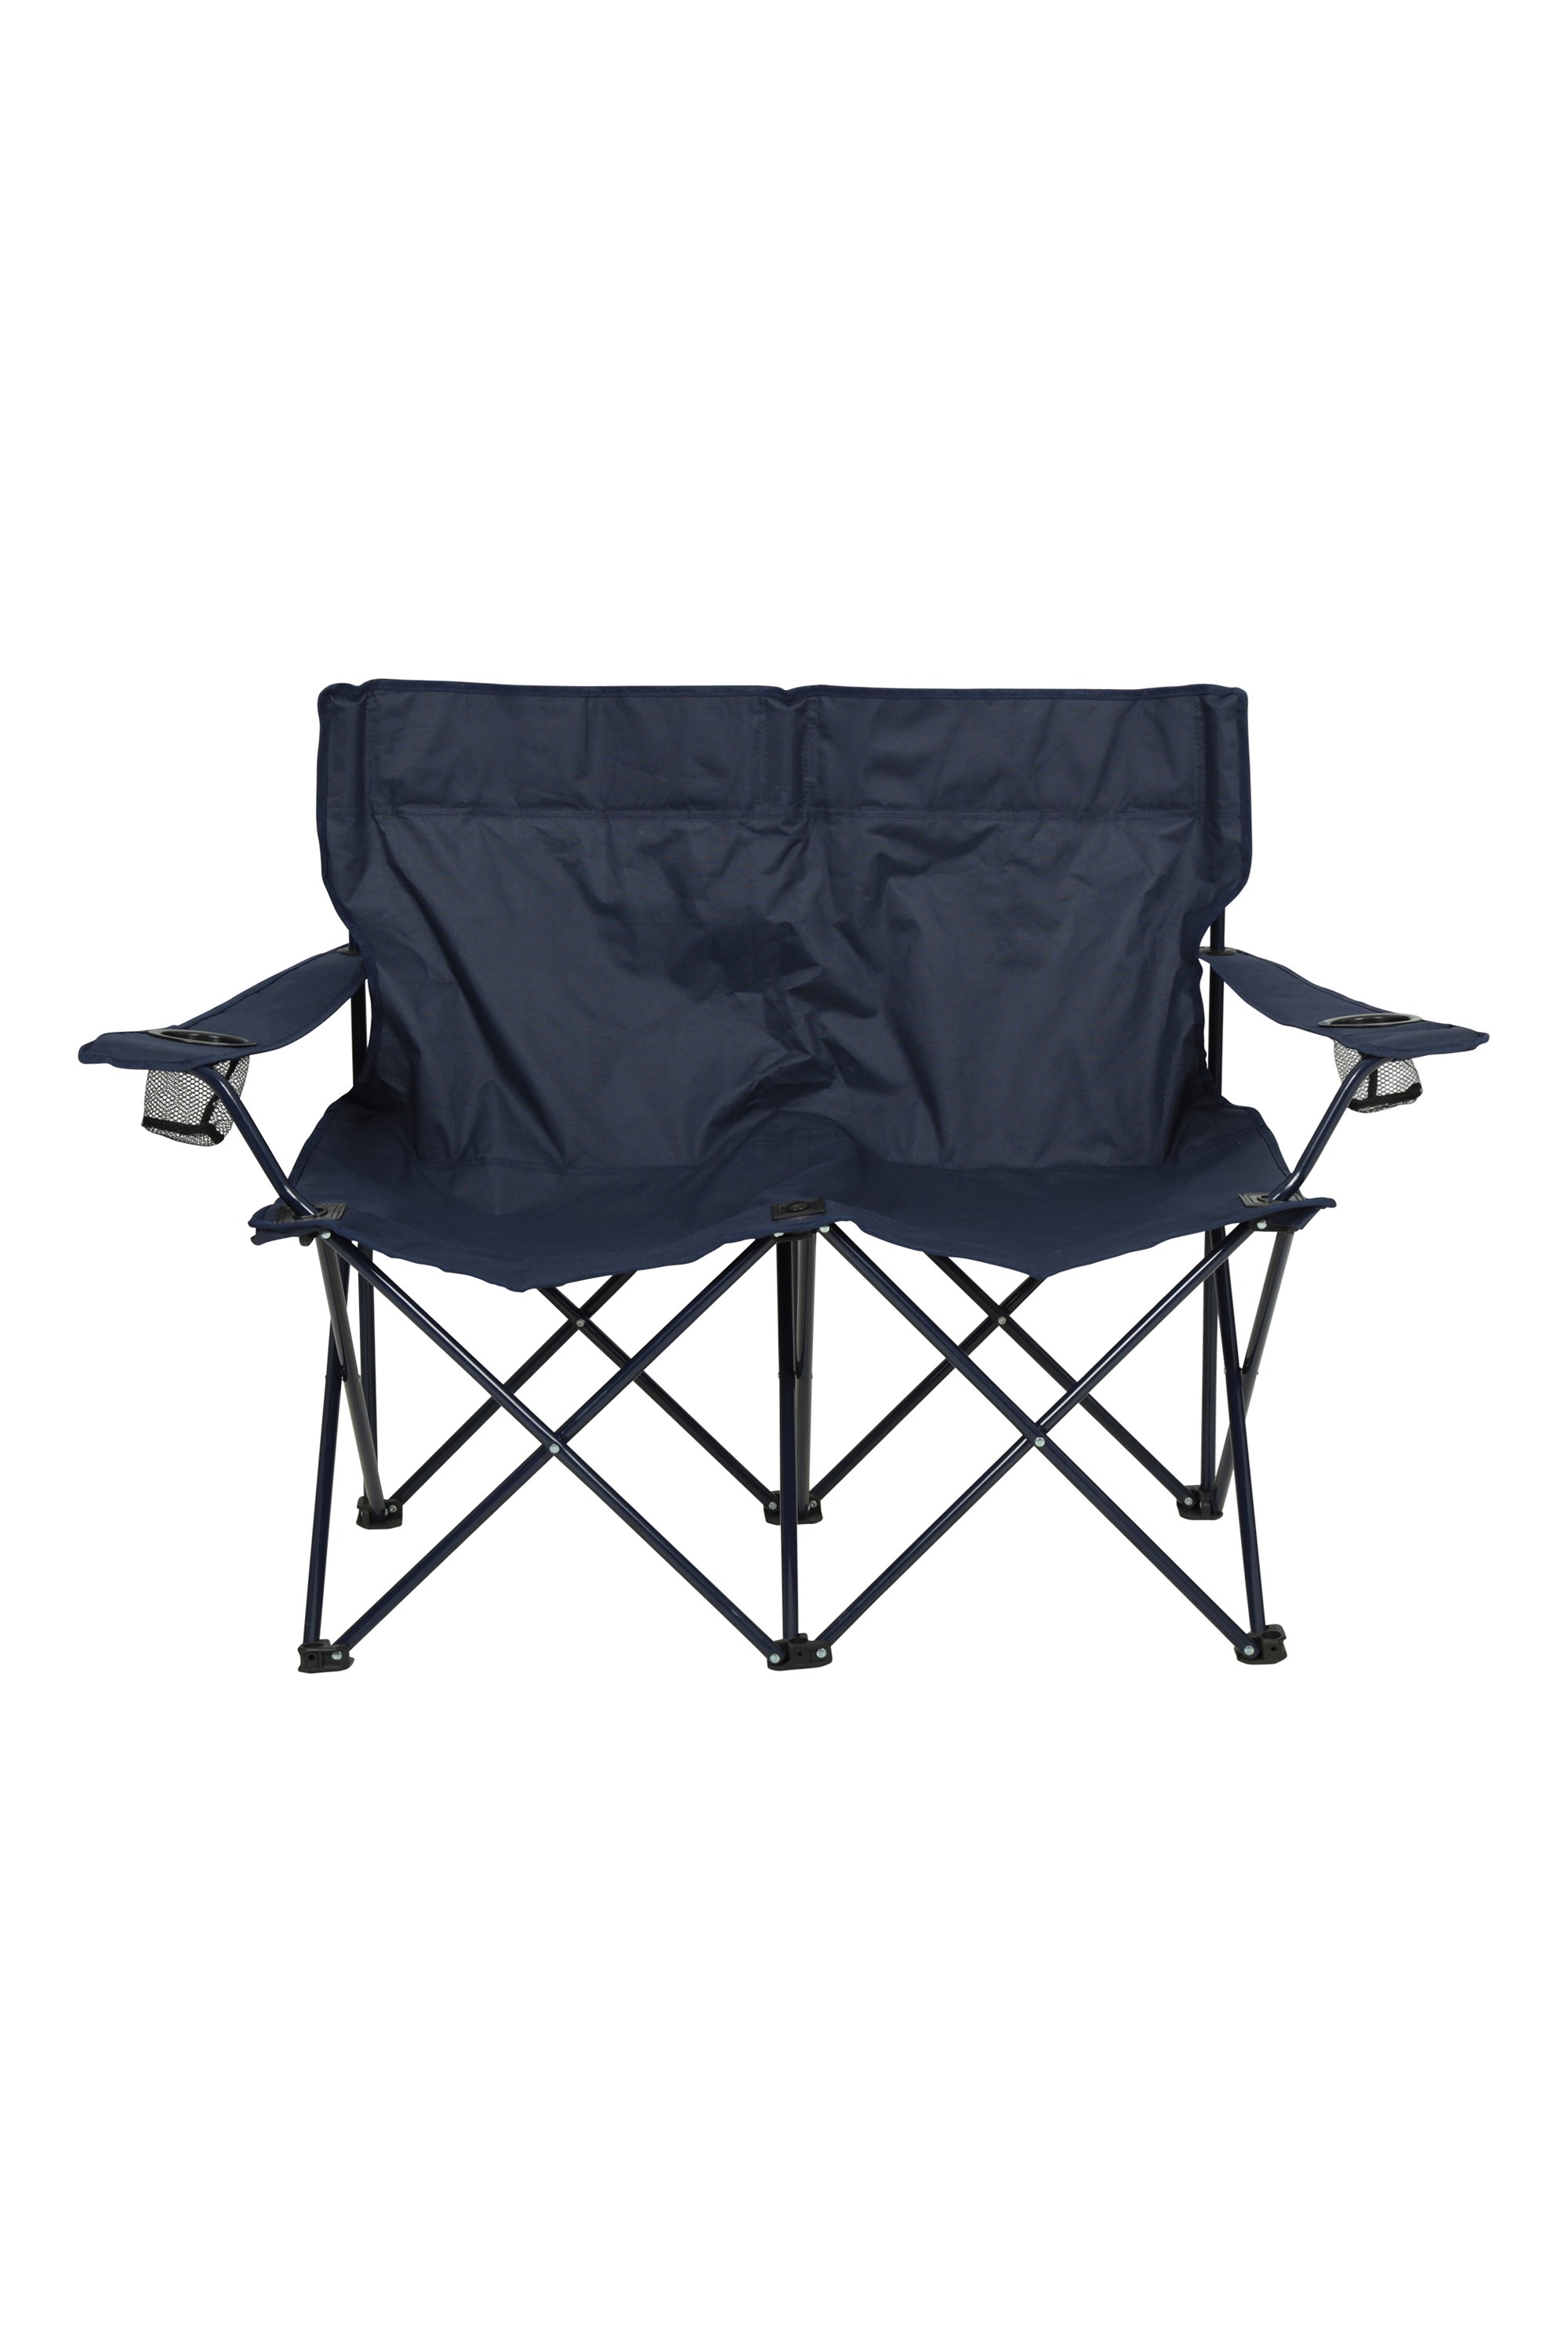 030710 double folding chair